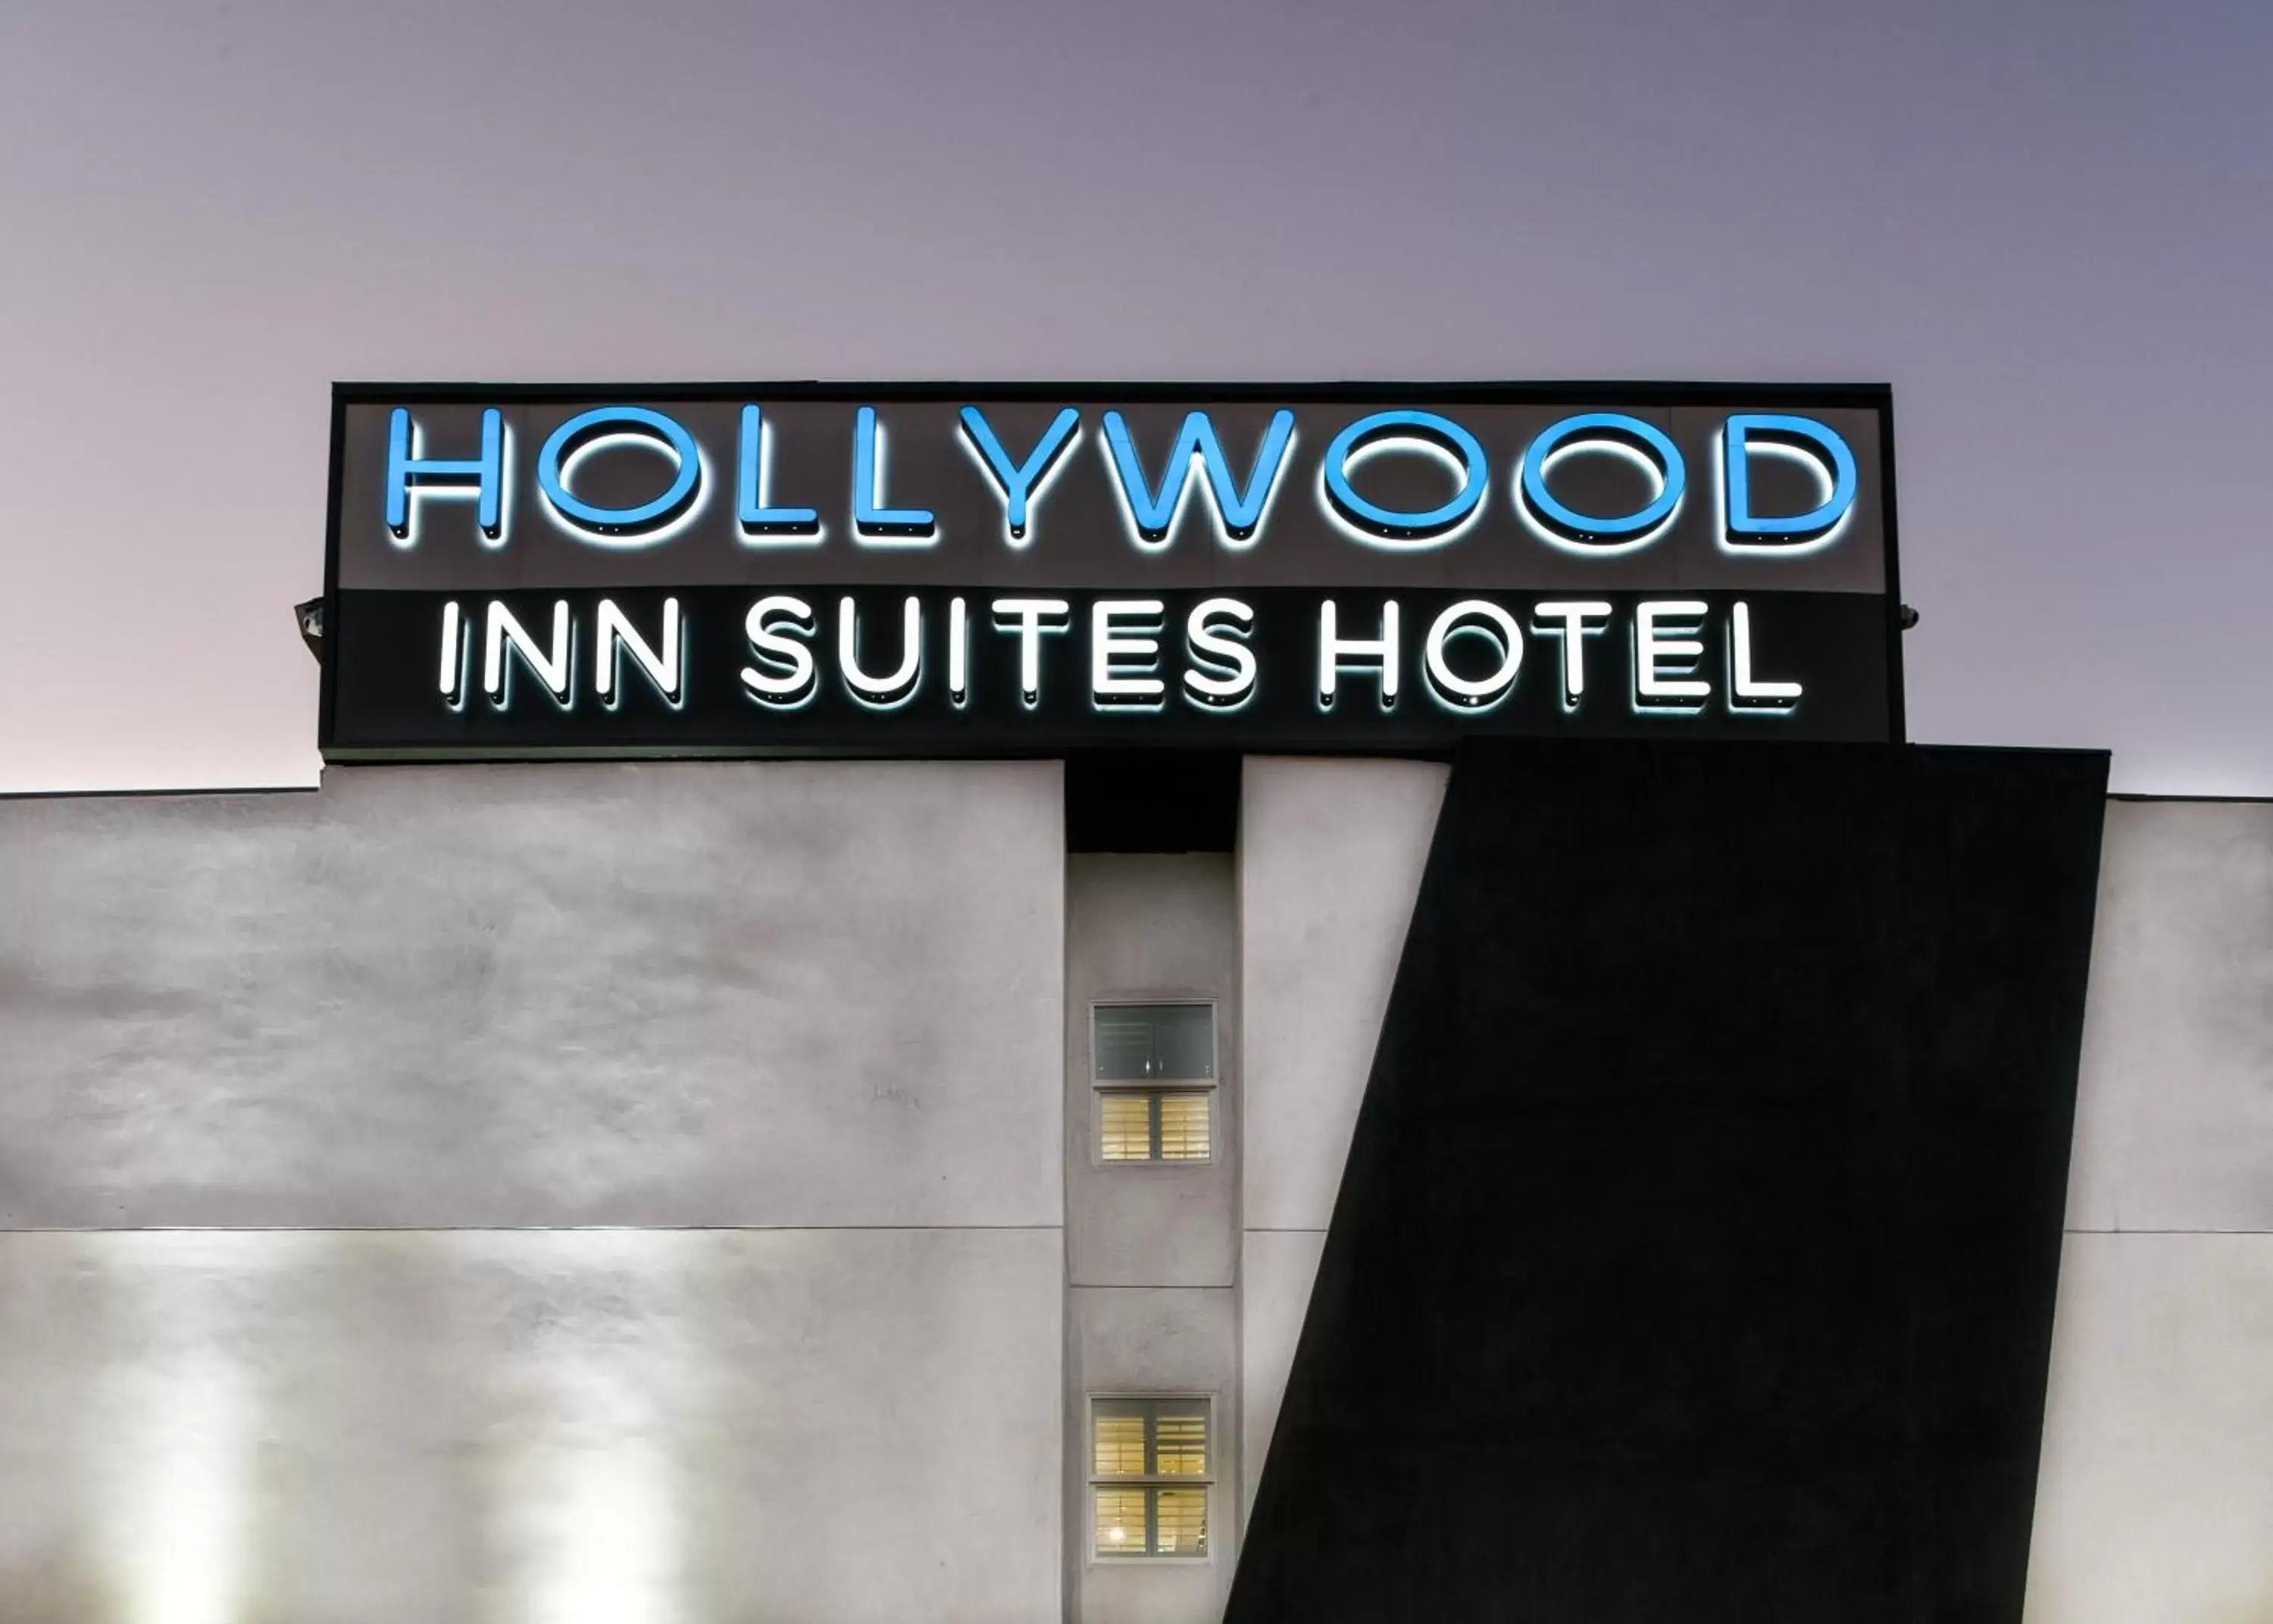 Property logo or sign, Property Logo/Sign in Hollywood Inn Suites Hotel